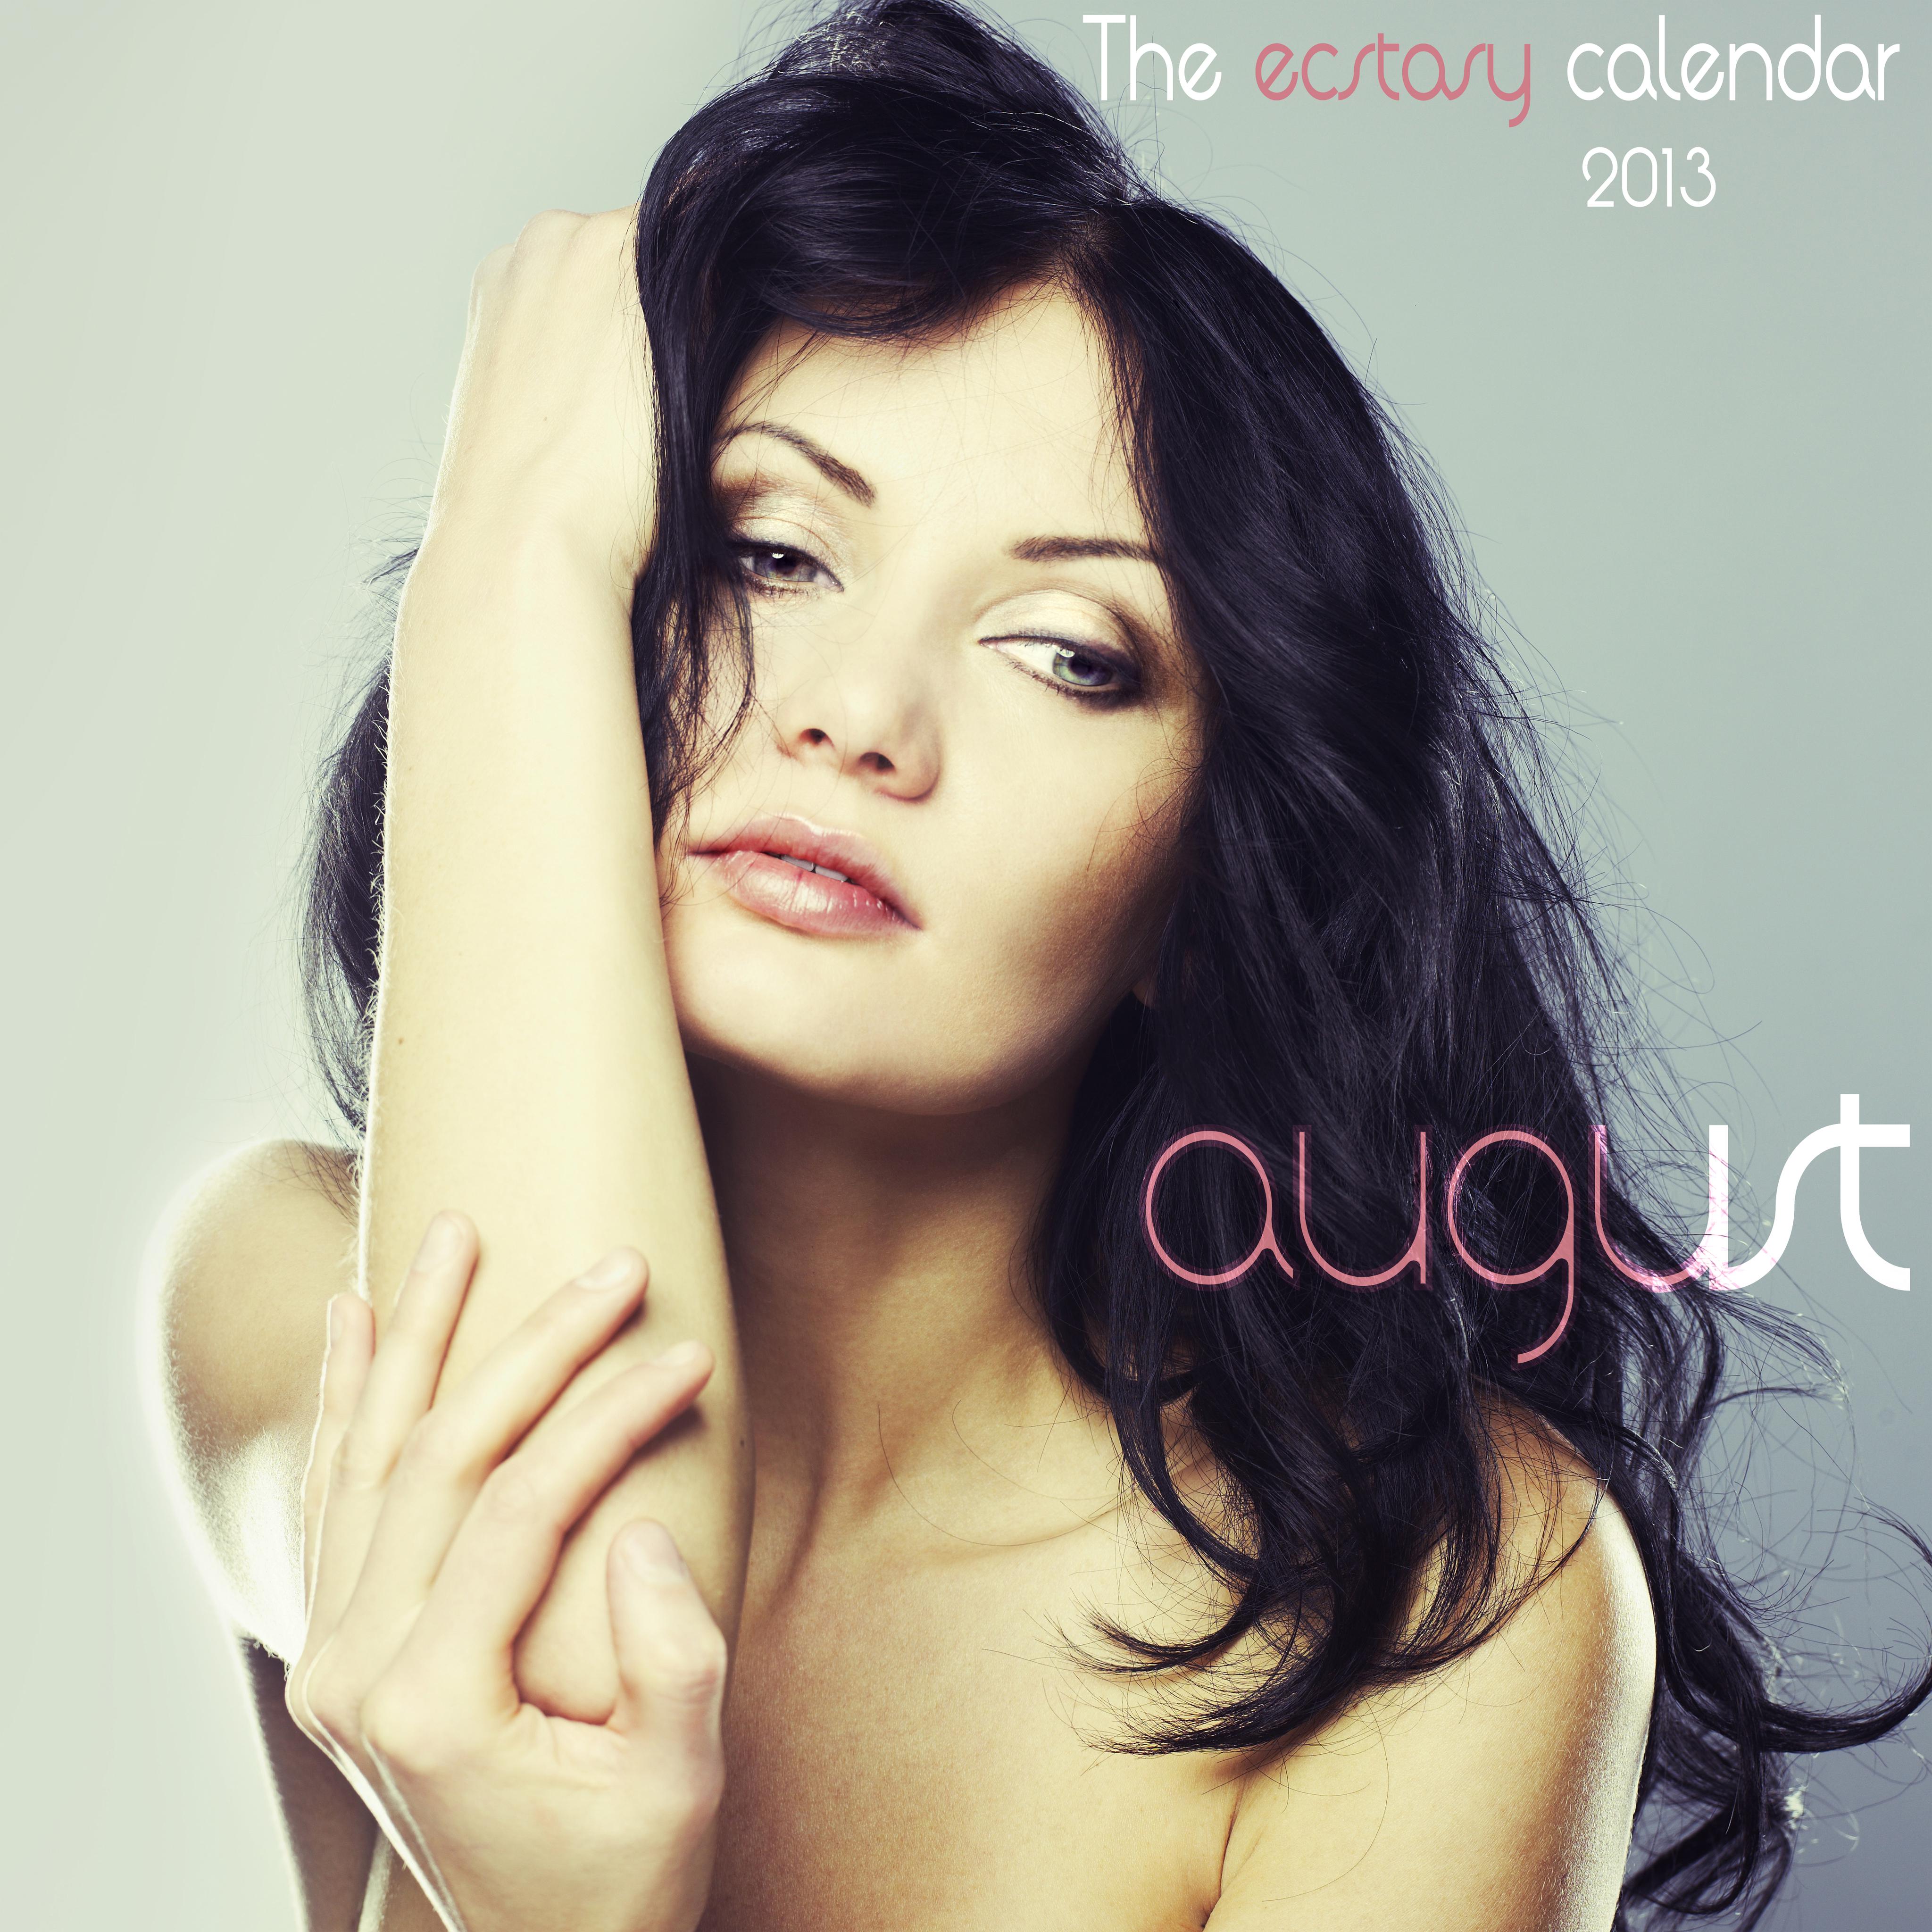 The Ecstasy Calendar 2013: August